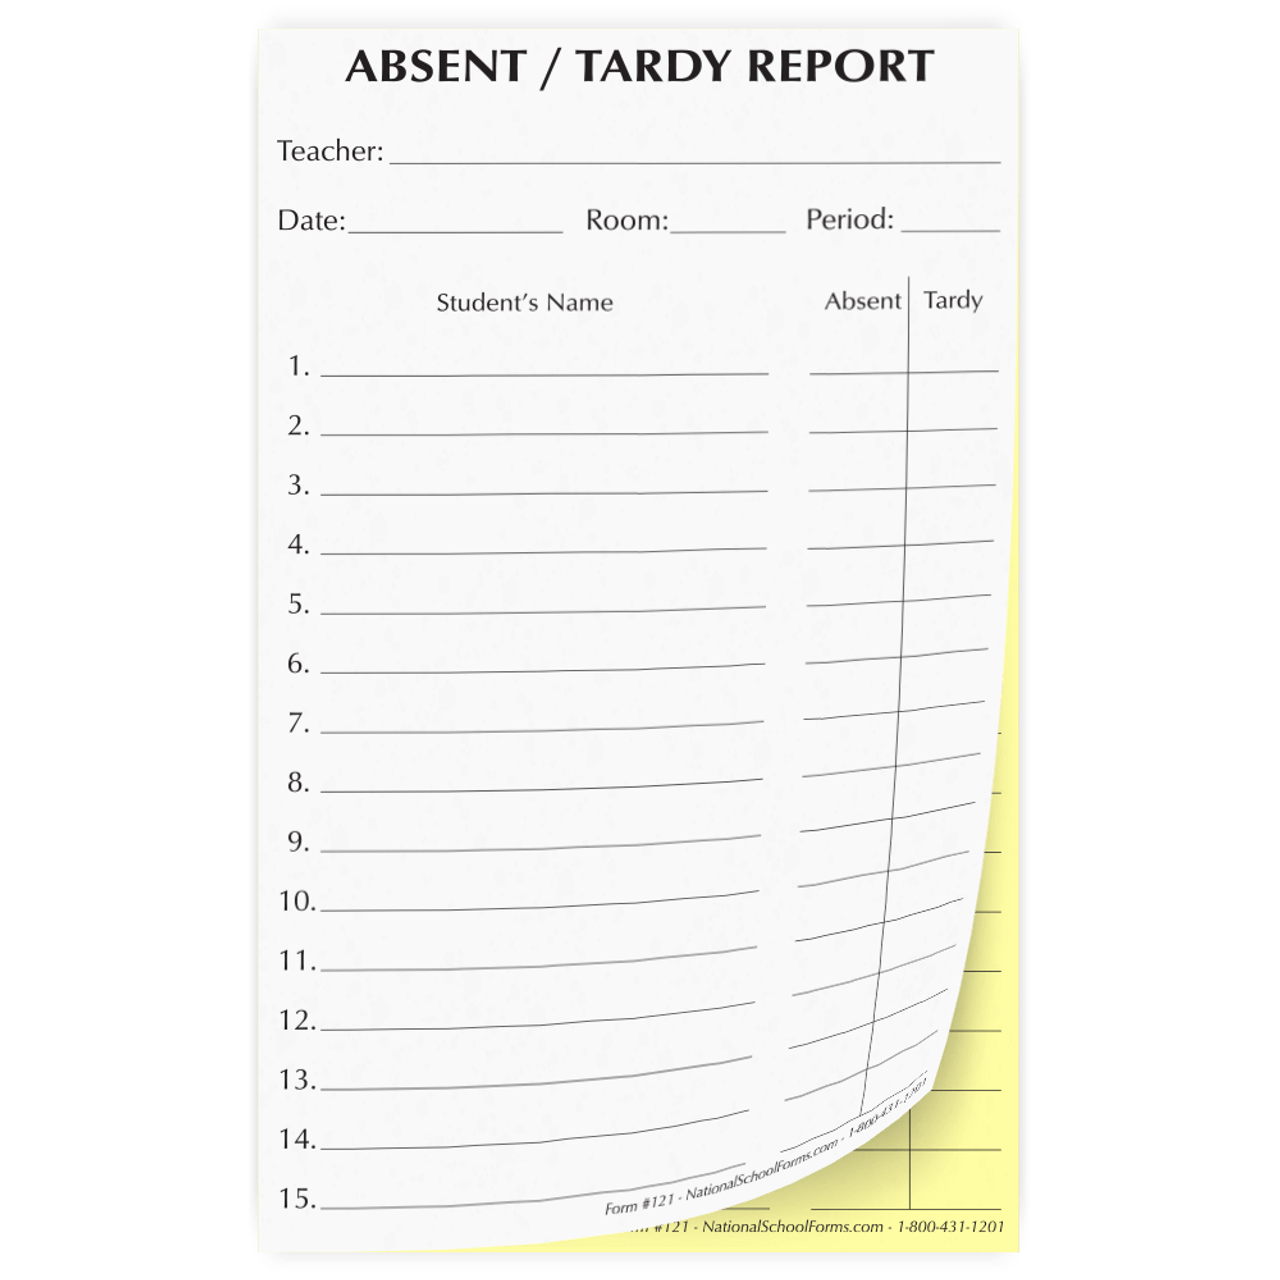 absent-tardy-report-slip-nationalschoolforms